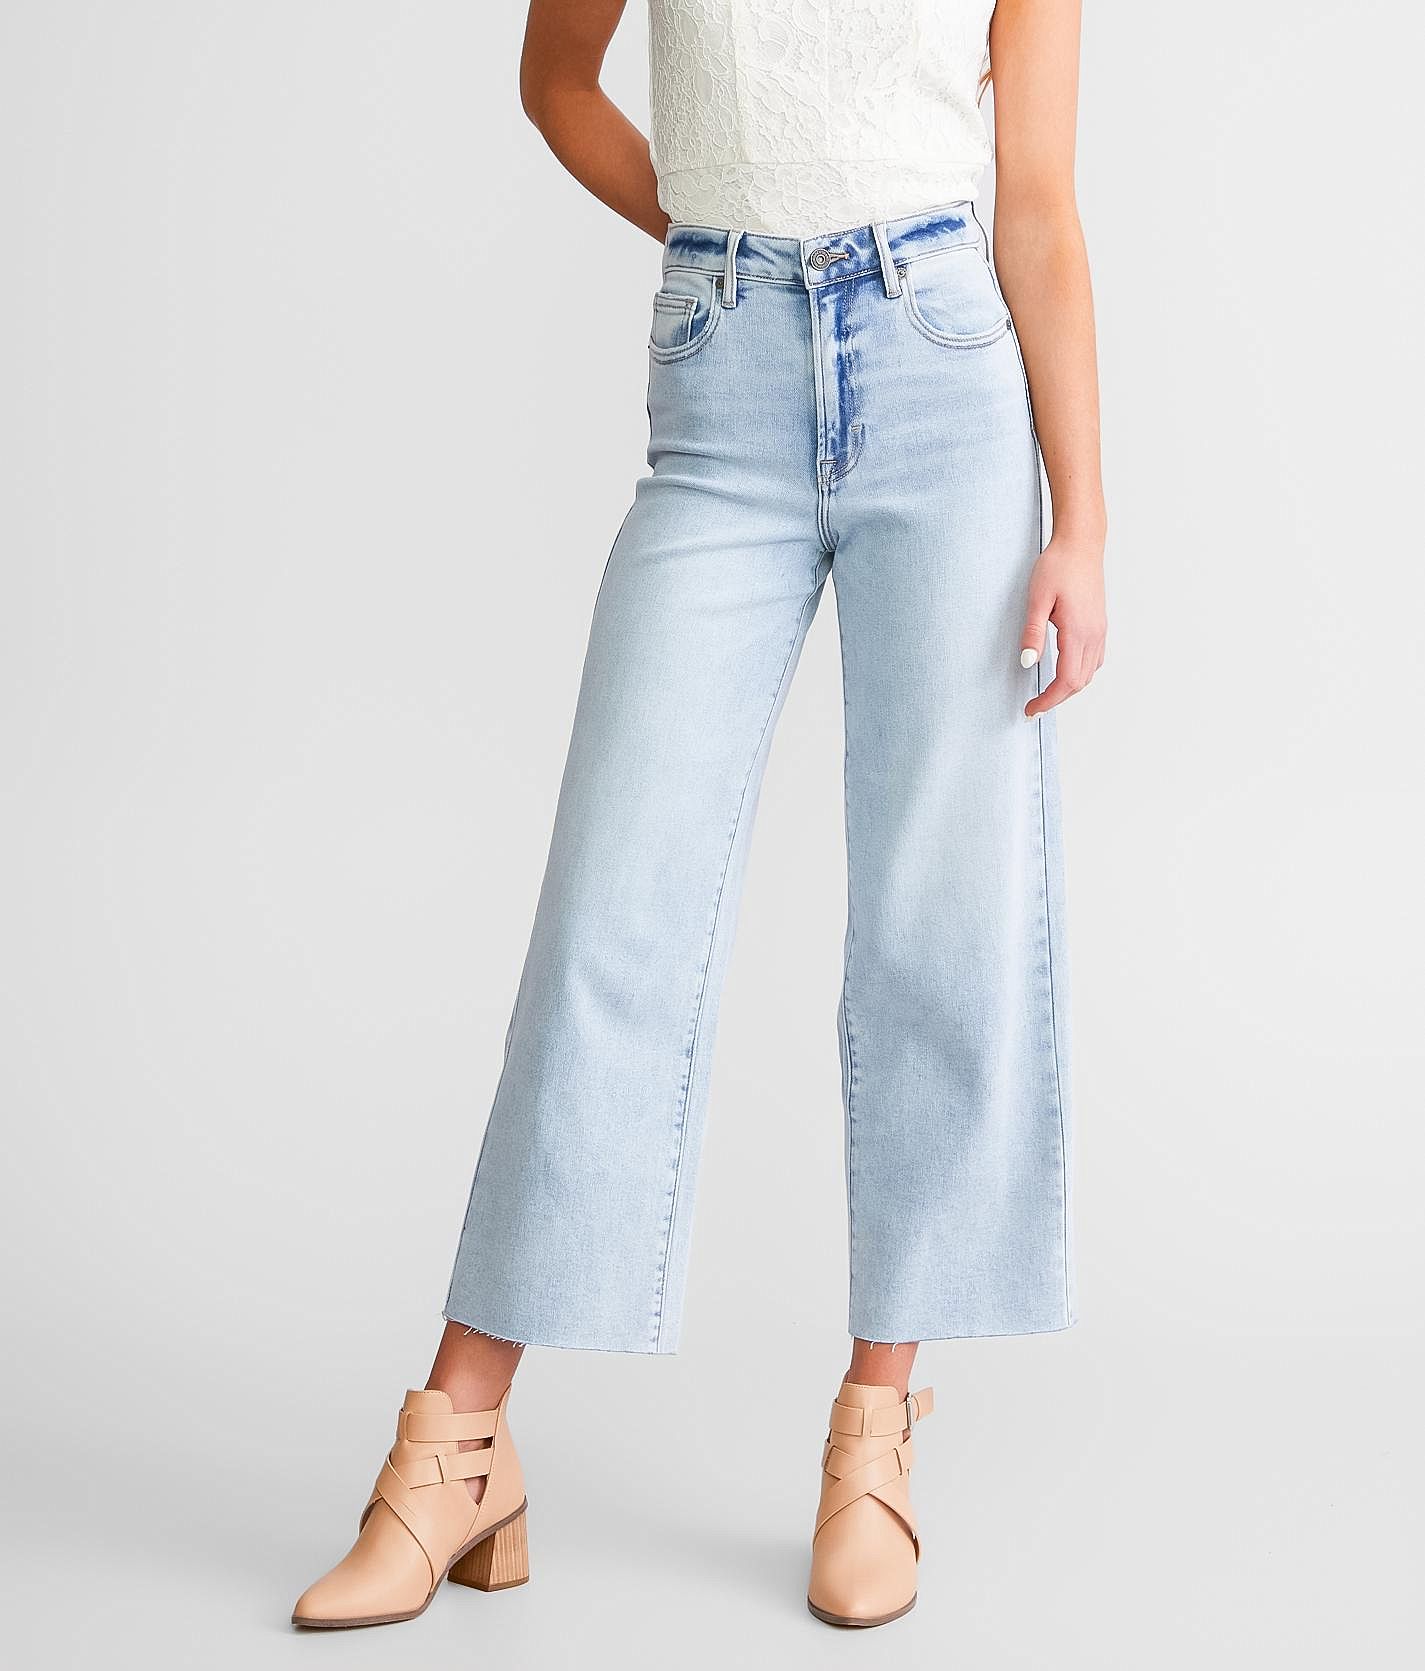 Wide Leg Cropped Jeans for Women